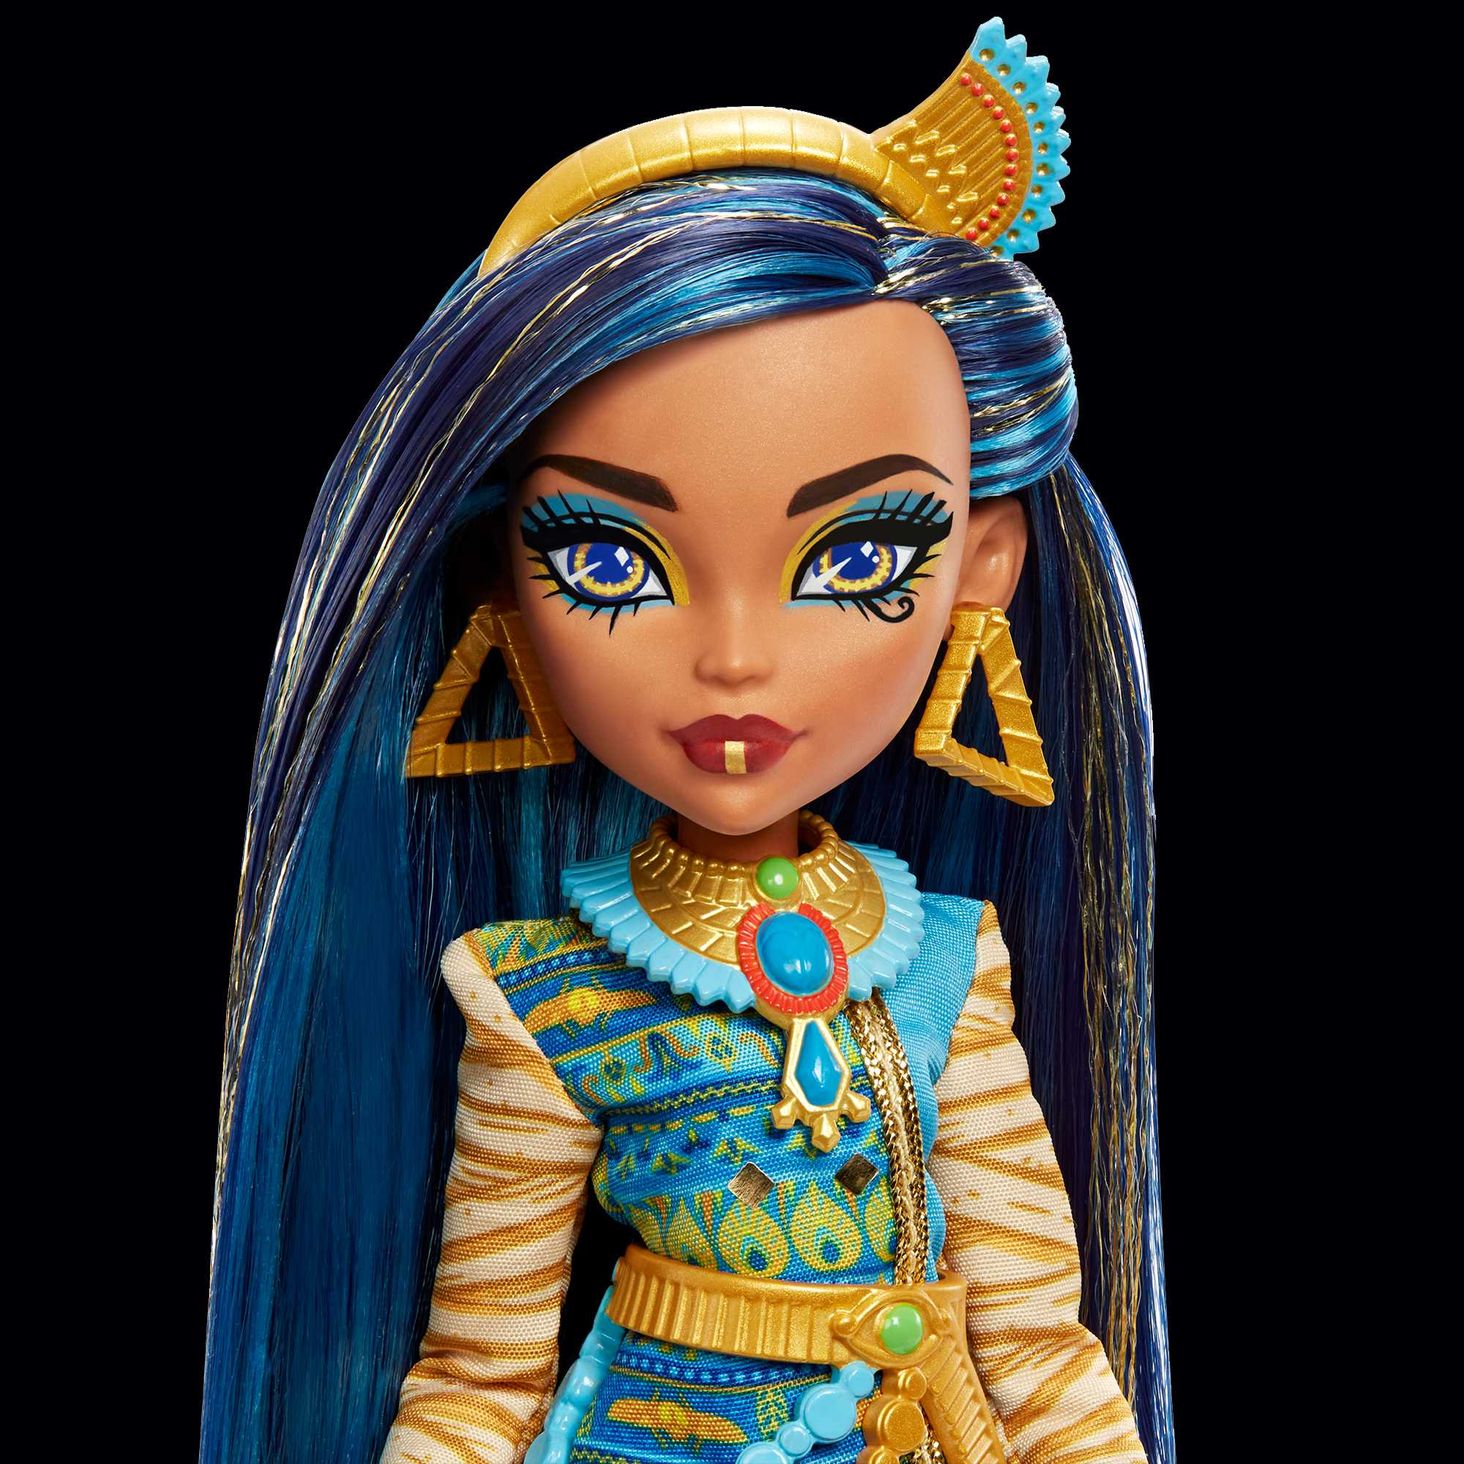 Boneca Mattel Monster High Cleo De Nile Moda Dourado HHK54